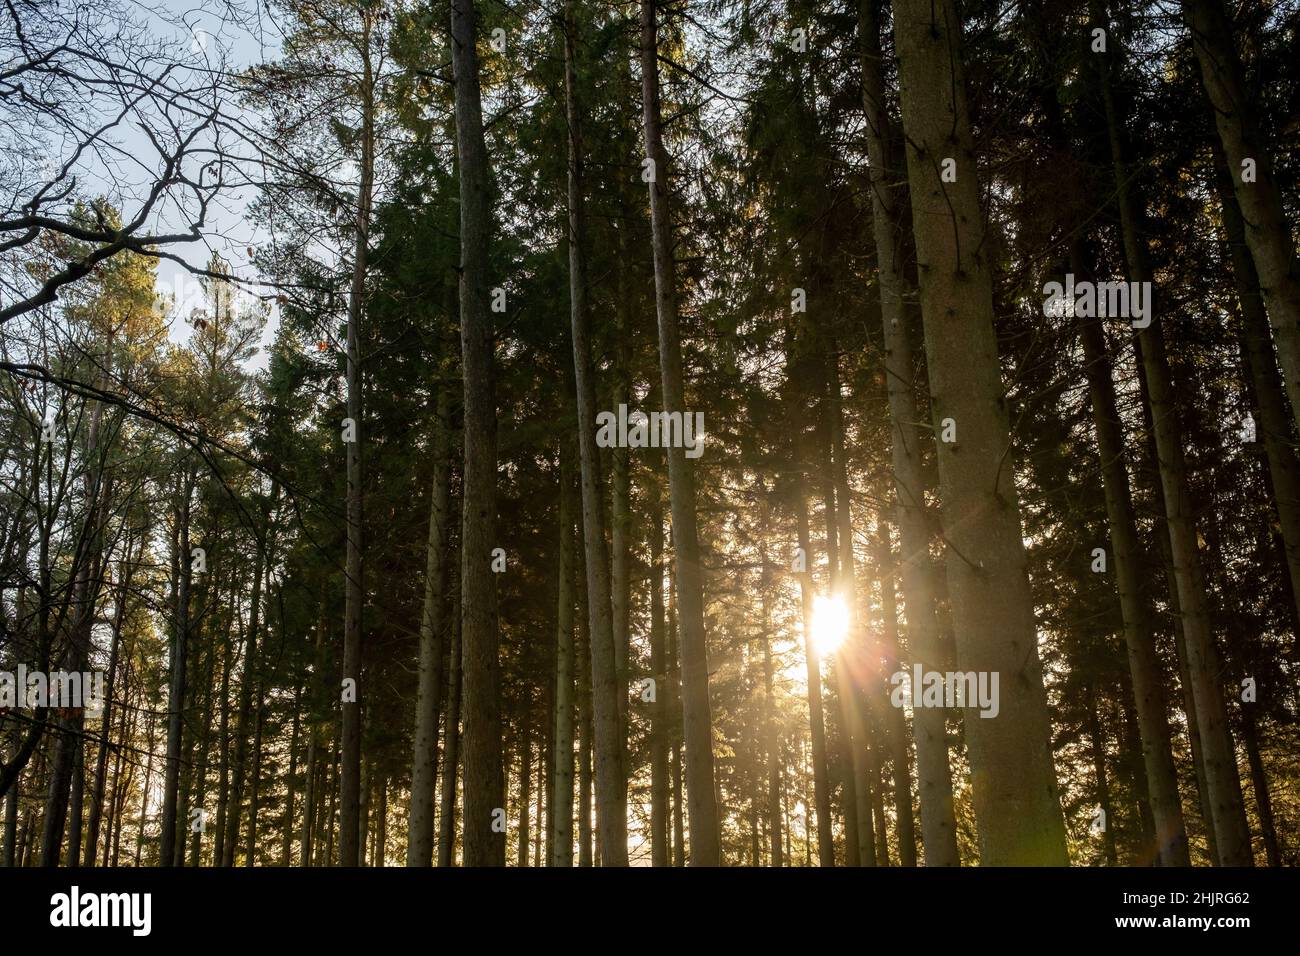 Kielder England: 13th January 2022: Tall tree trunks with golden winter sun peeping through Stock Photo